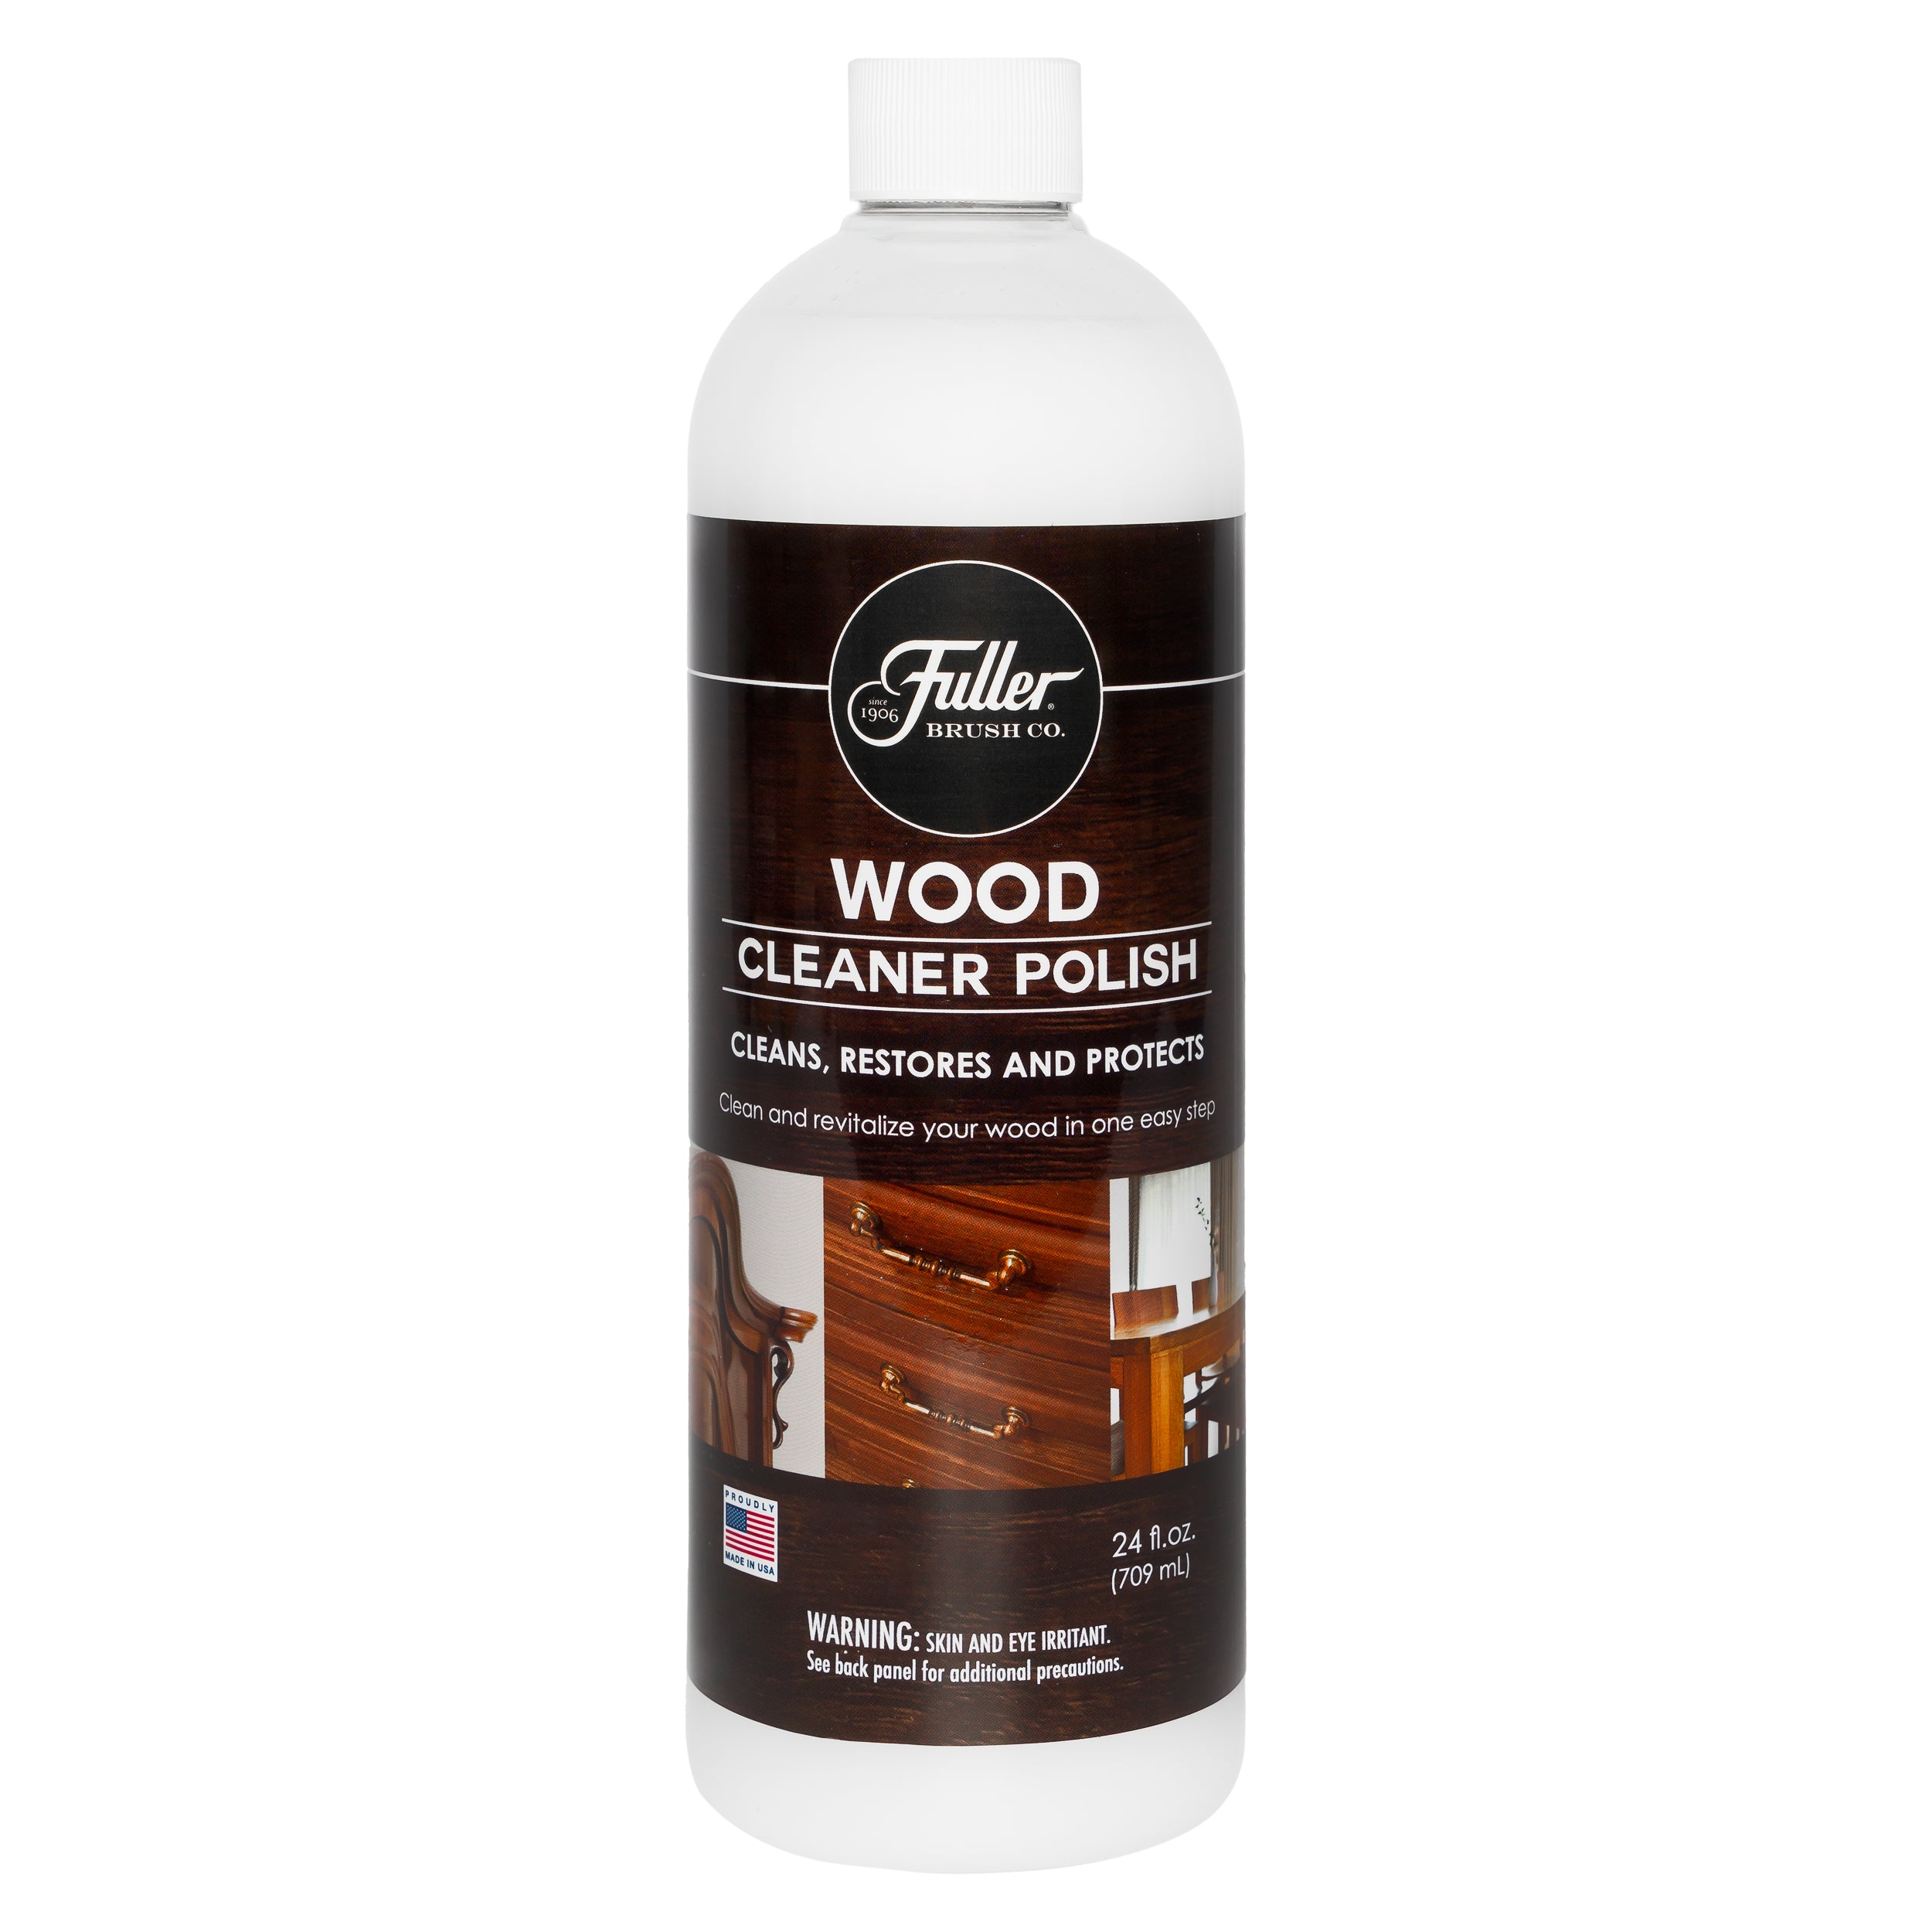 Wood Cleaner Polish